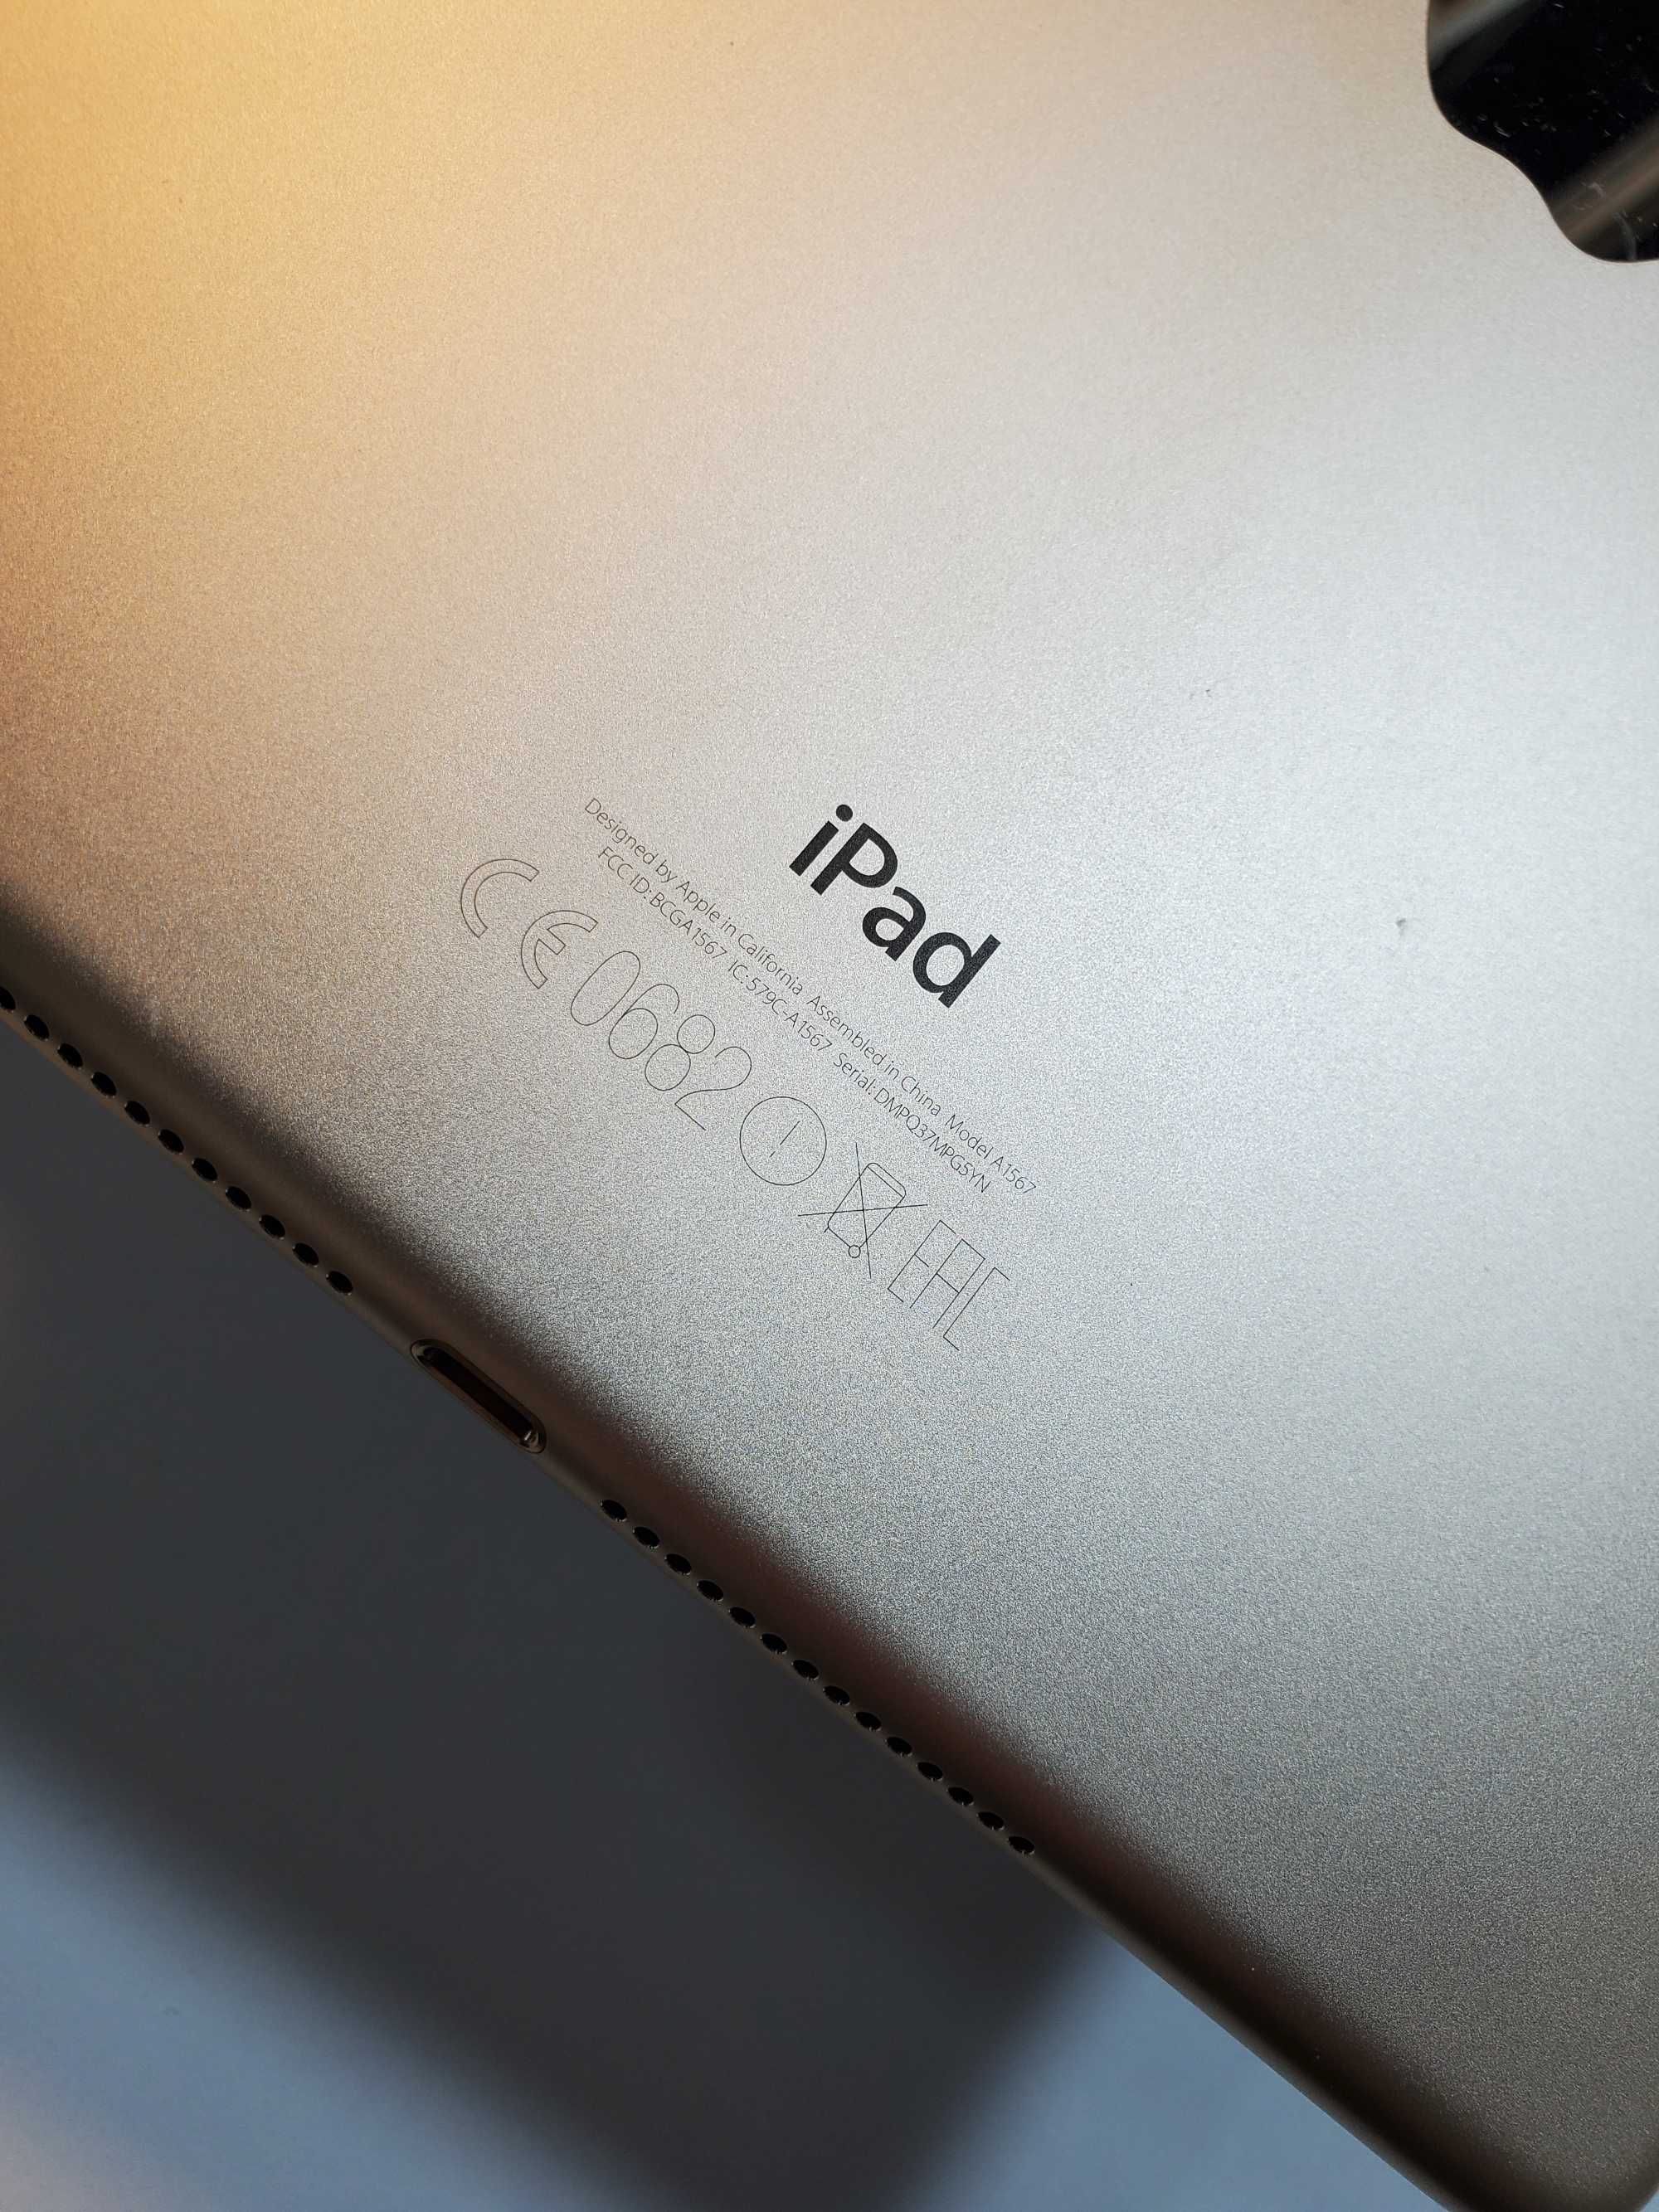 Tableta iPad air 2 gold impecabil